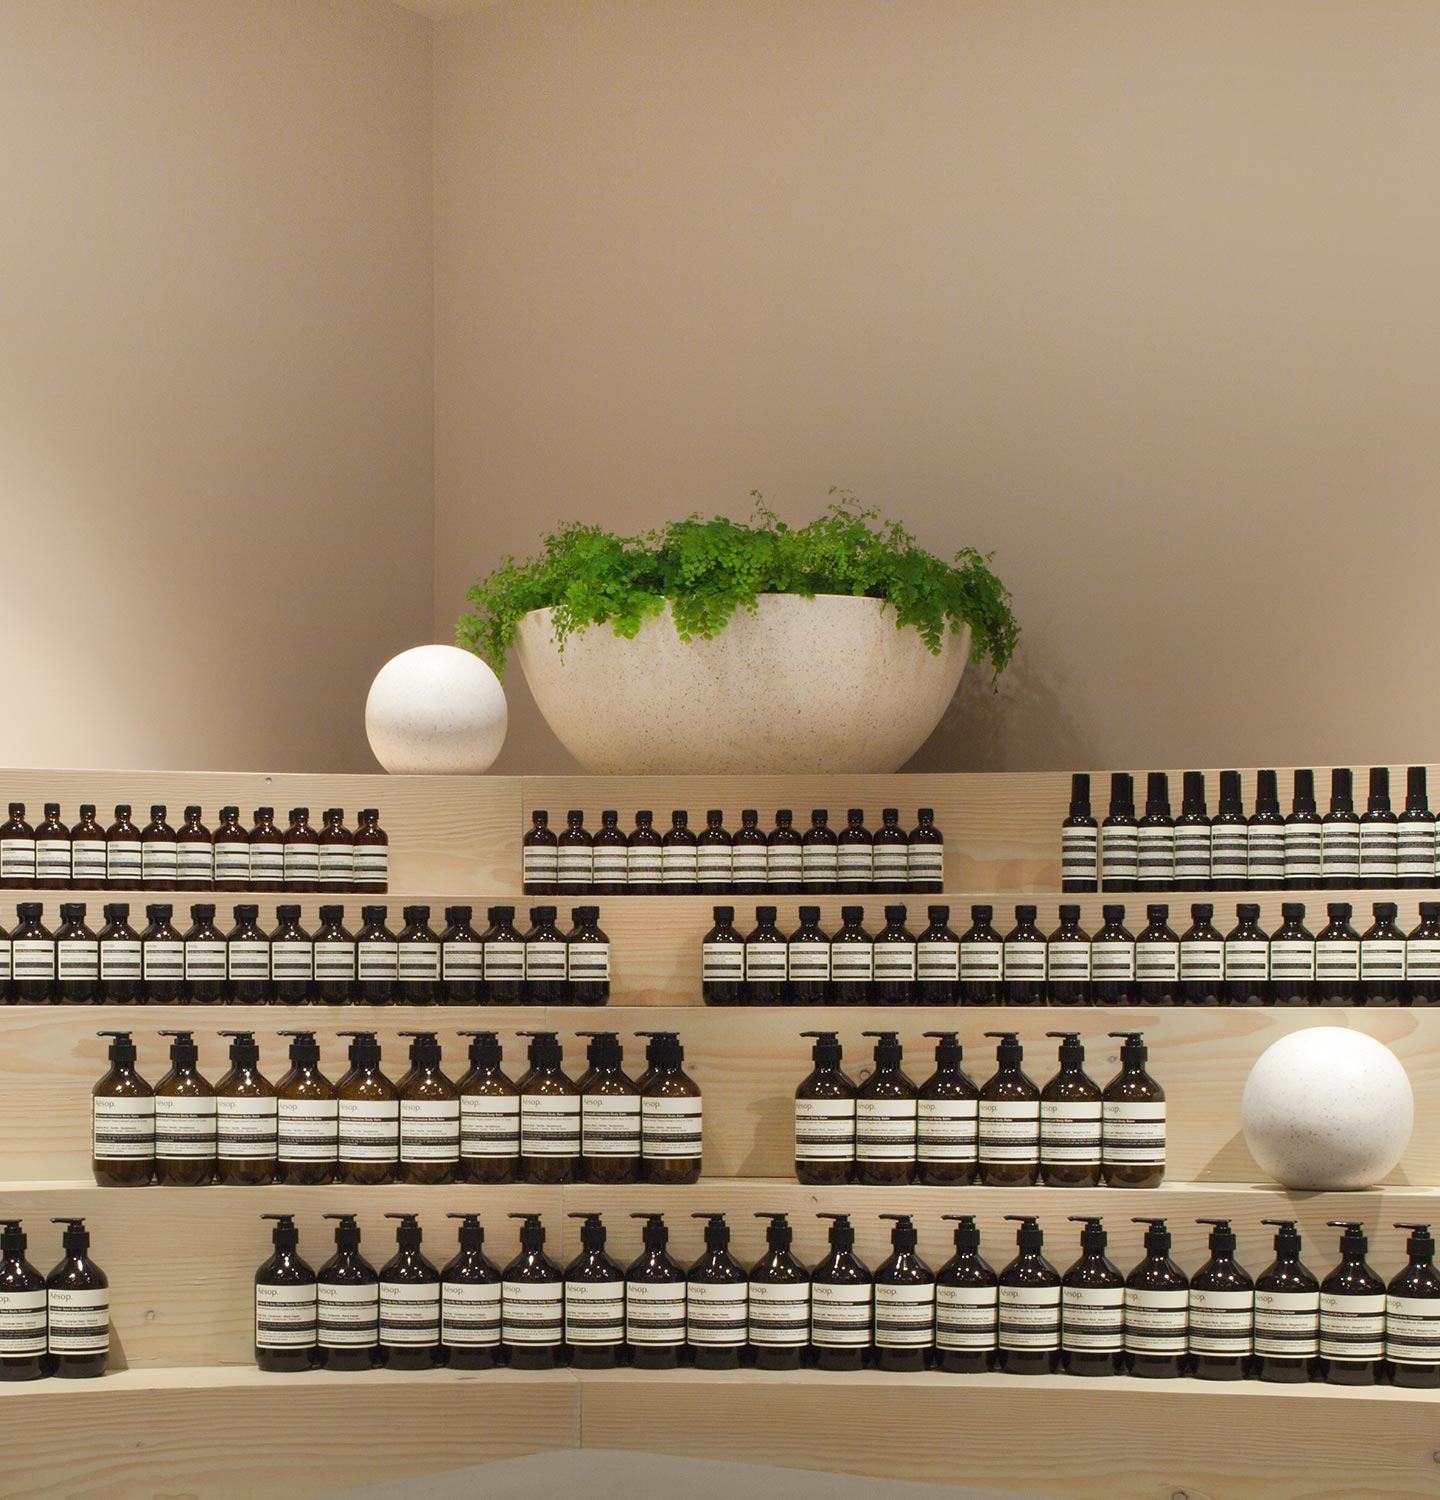 Aesop products on shelf below a pot plant.